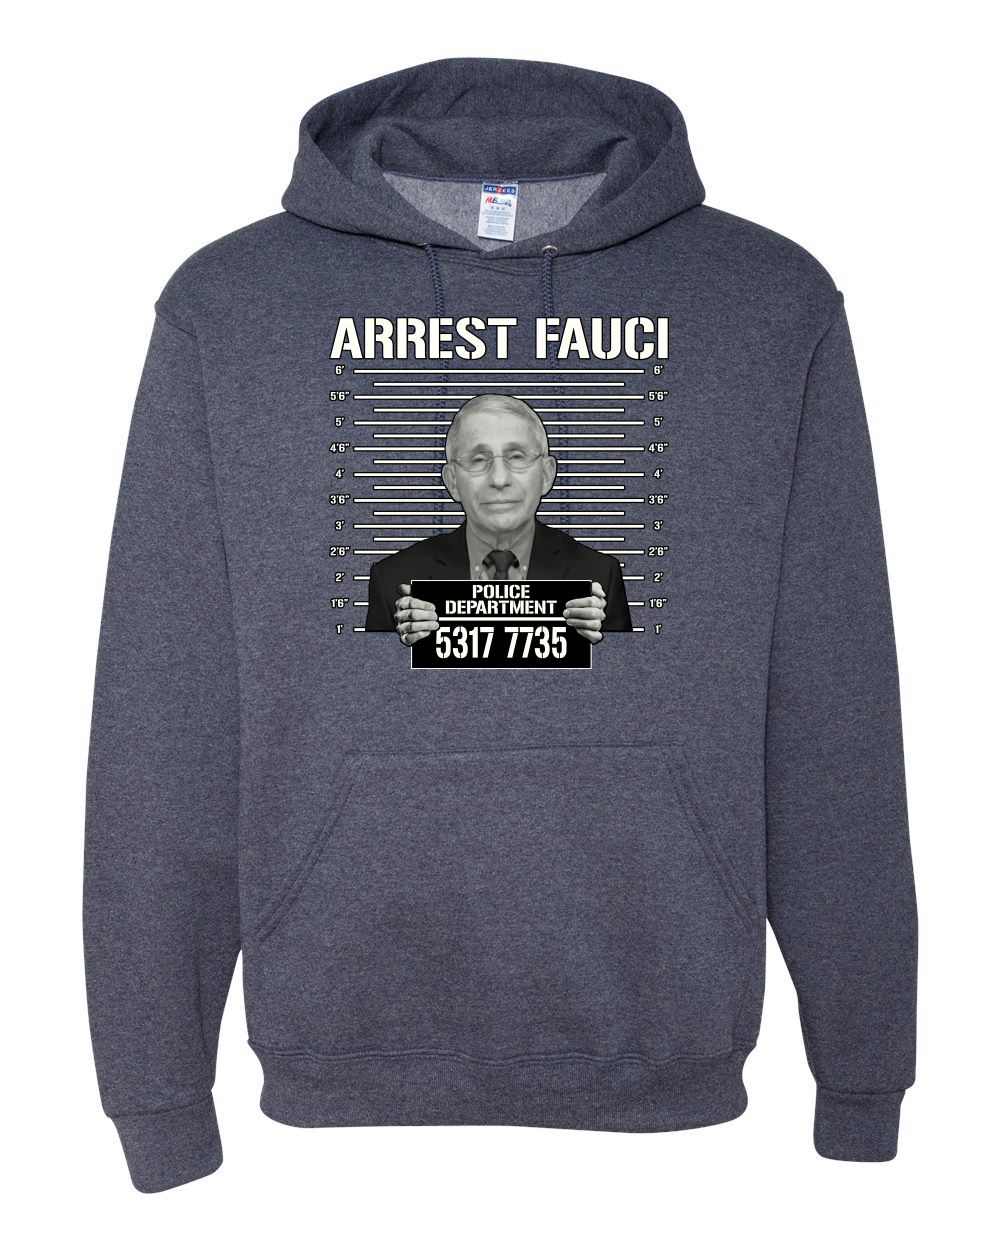 thumbnail 19  - Arrest Fauci Mugshot Political Unisex Graphic Hooded Sweatshirt